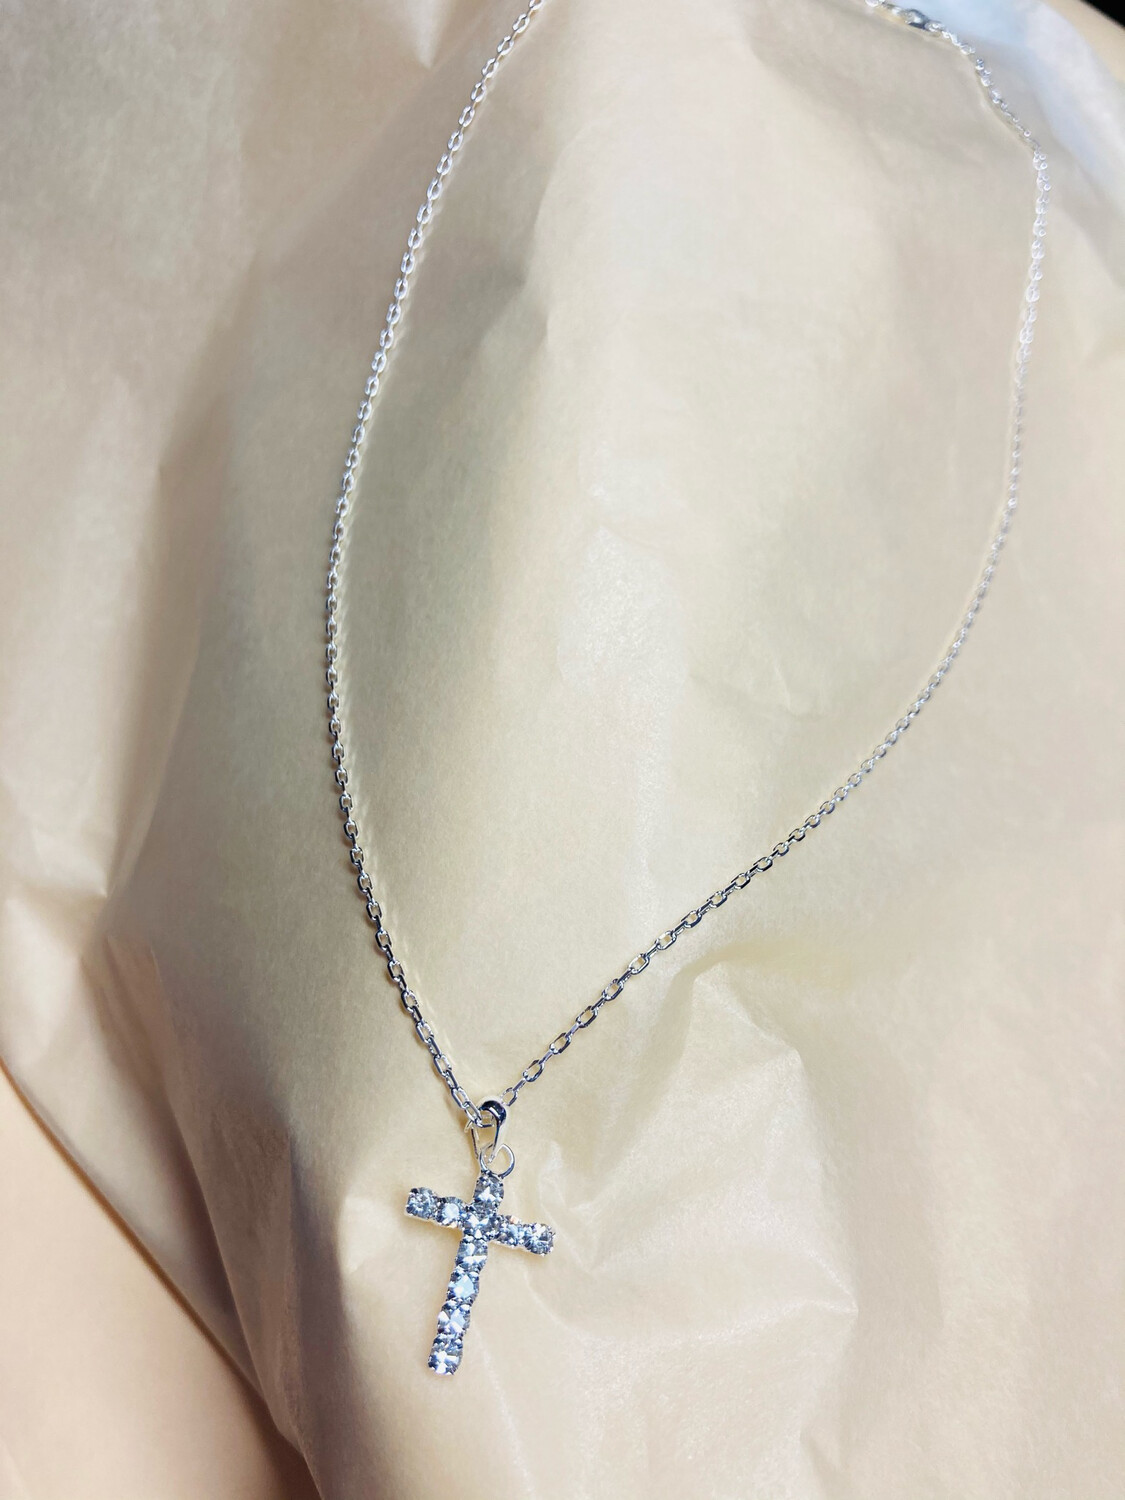 Communion Necklace keepsake with Cross